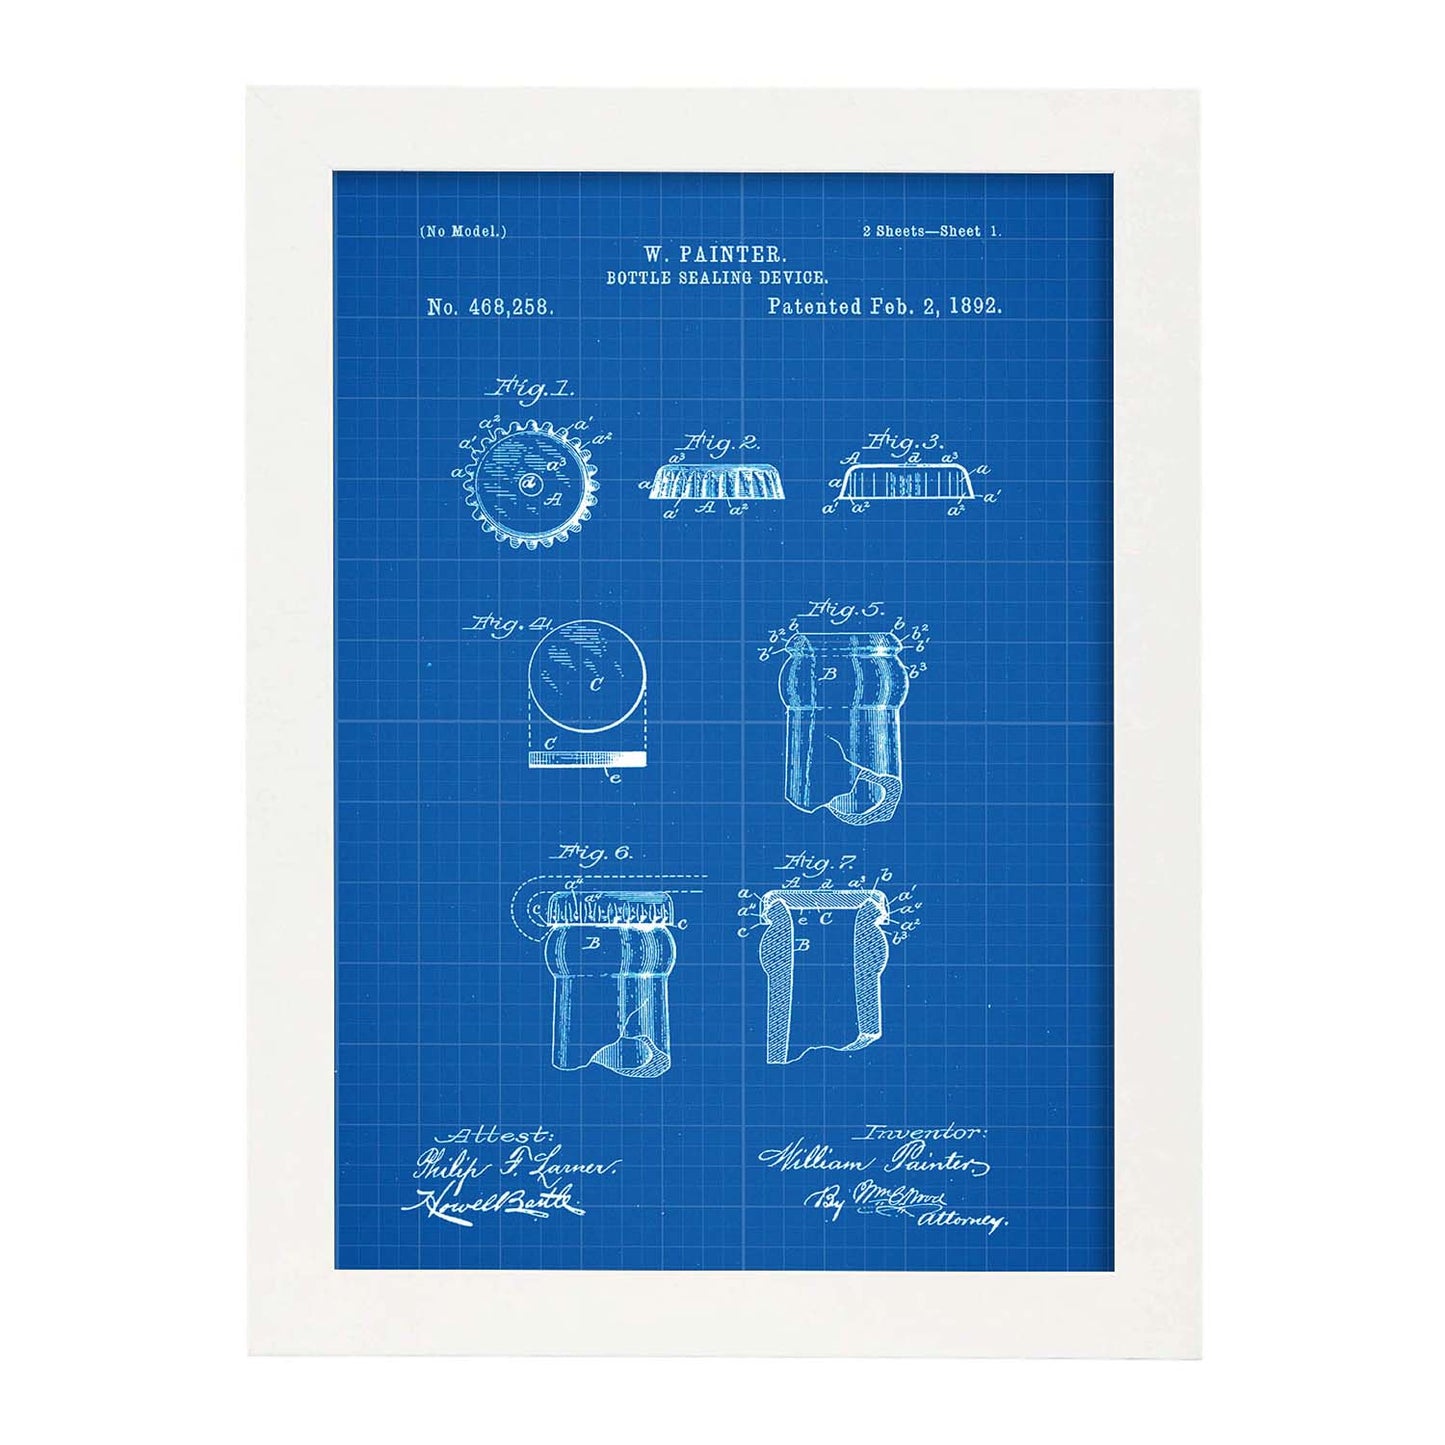 Poster con patente de Chapa de botella. Lámina con diseño de patente antigua-Artwork-Nacnic-A4-Marco Blanco-Nacnic Estudio SL